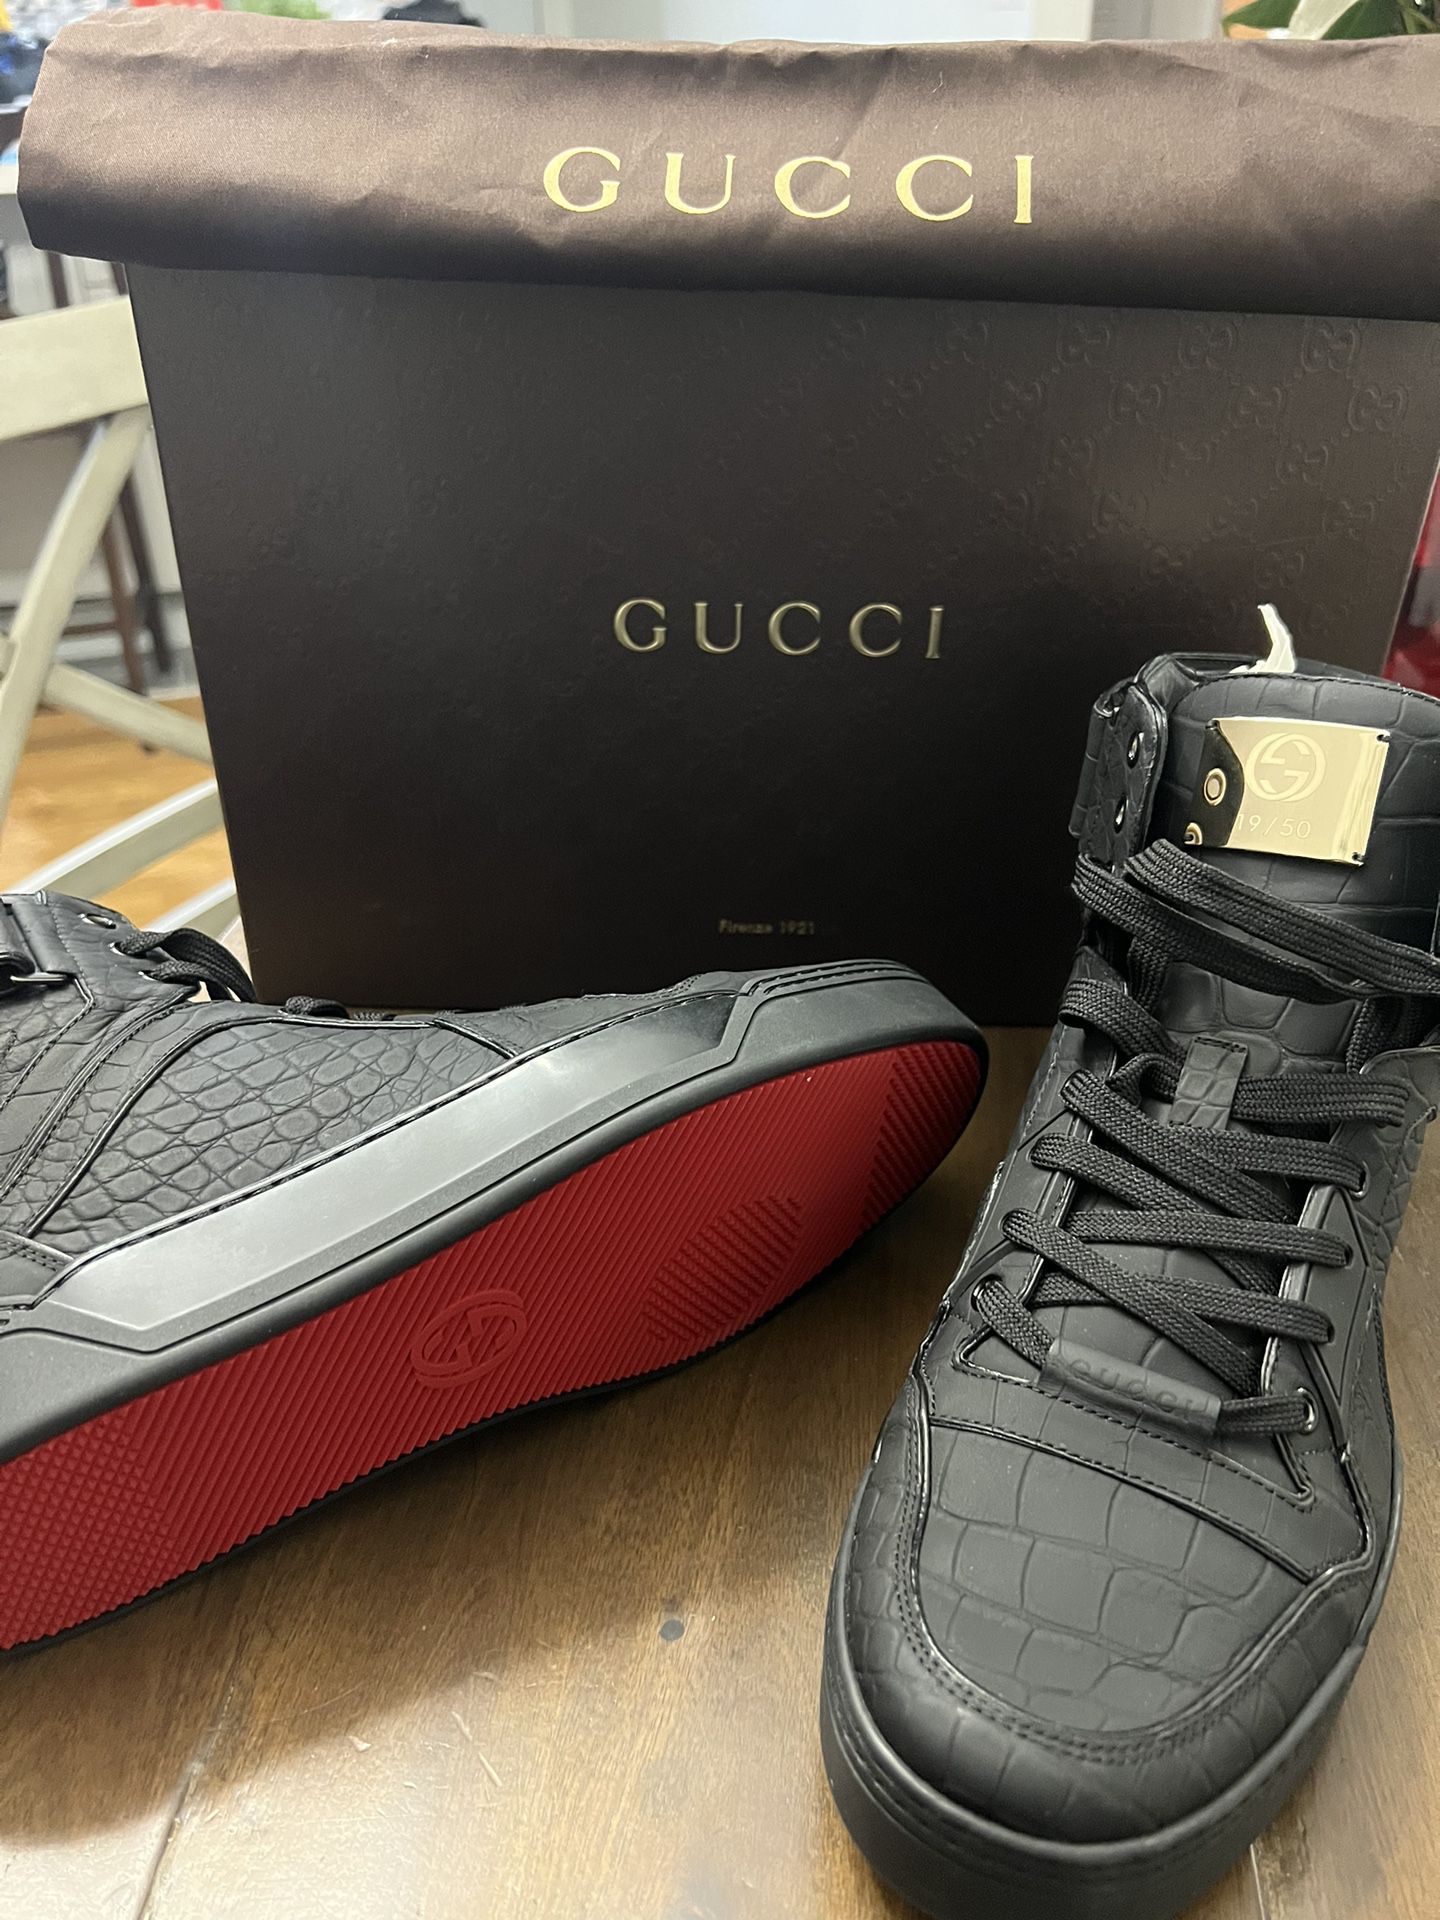 Elektriker Rendition Måge Men's Limited Edition Gucci Sneakers for Sale in Fort Lauderdale, FL -  OfferUp